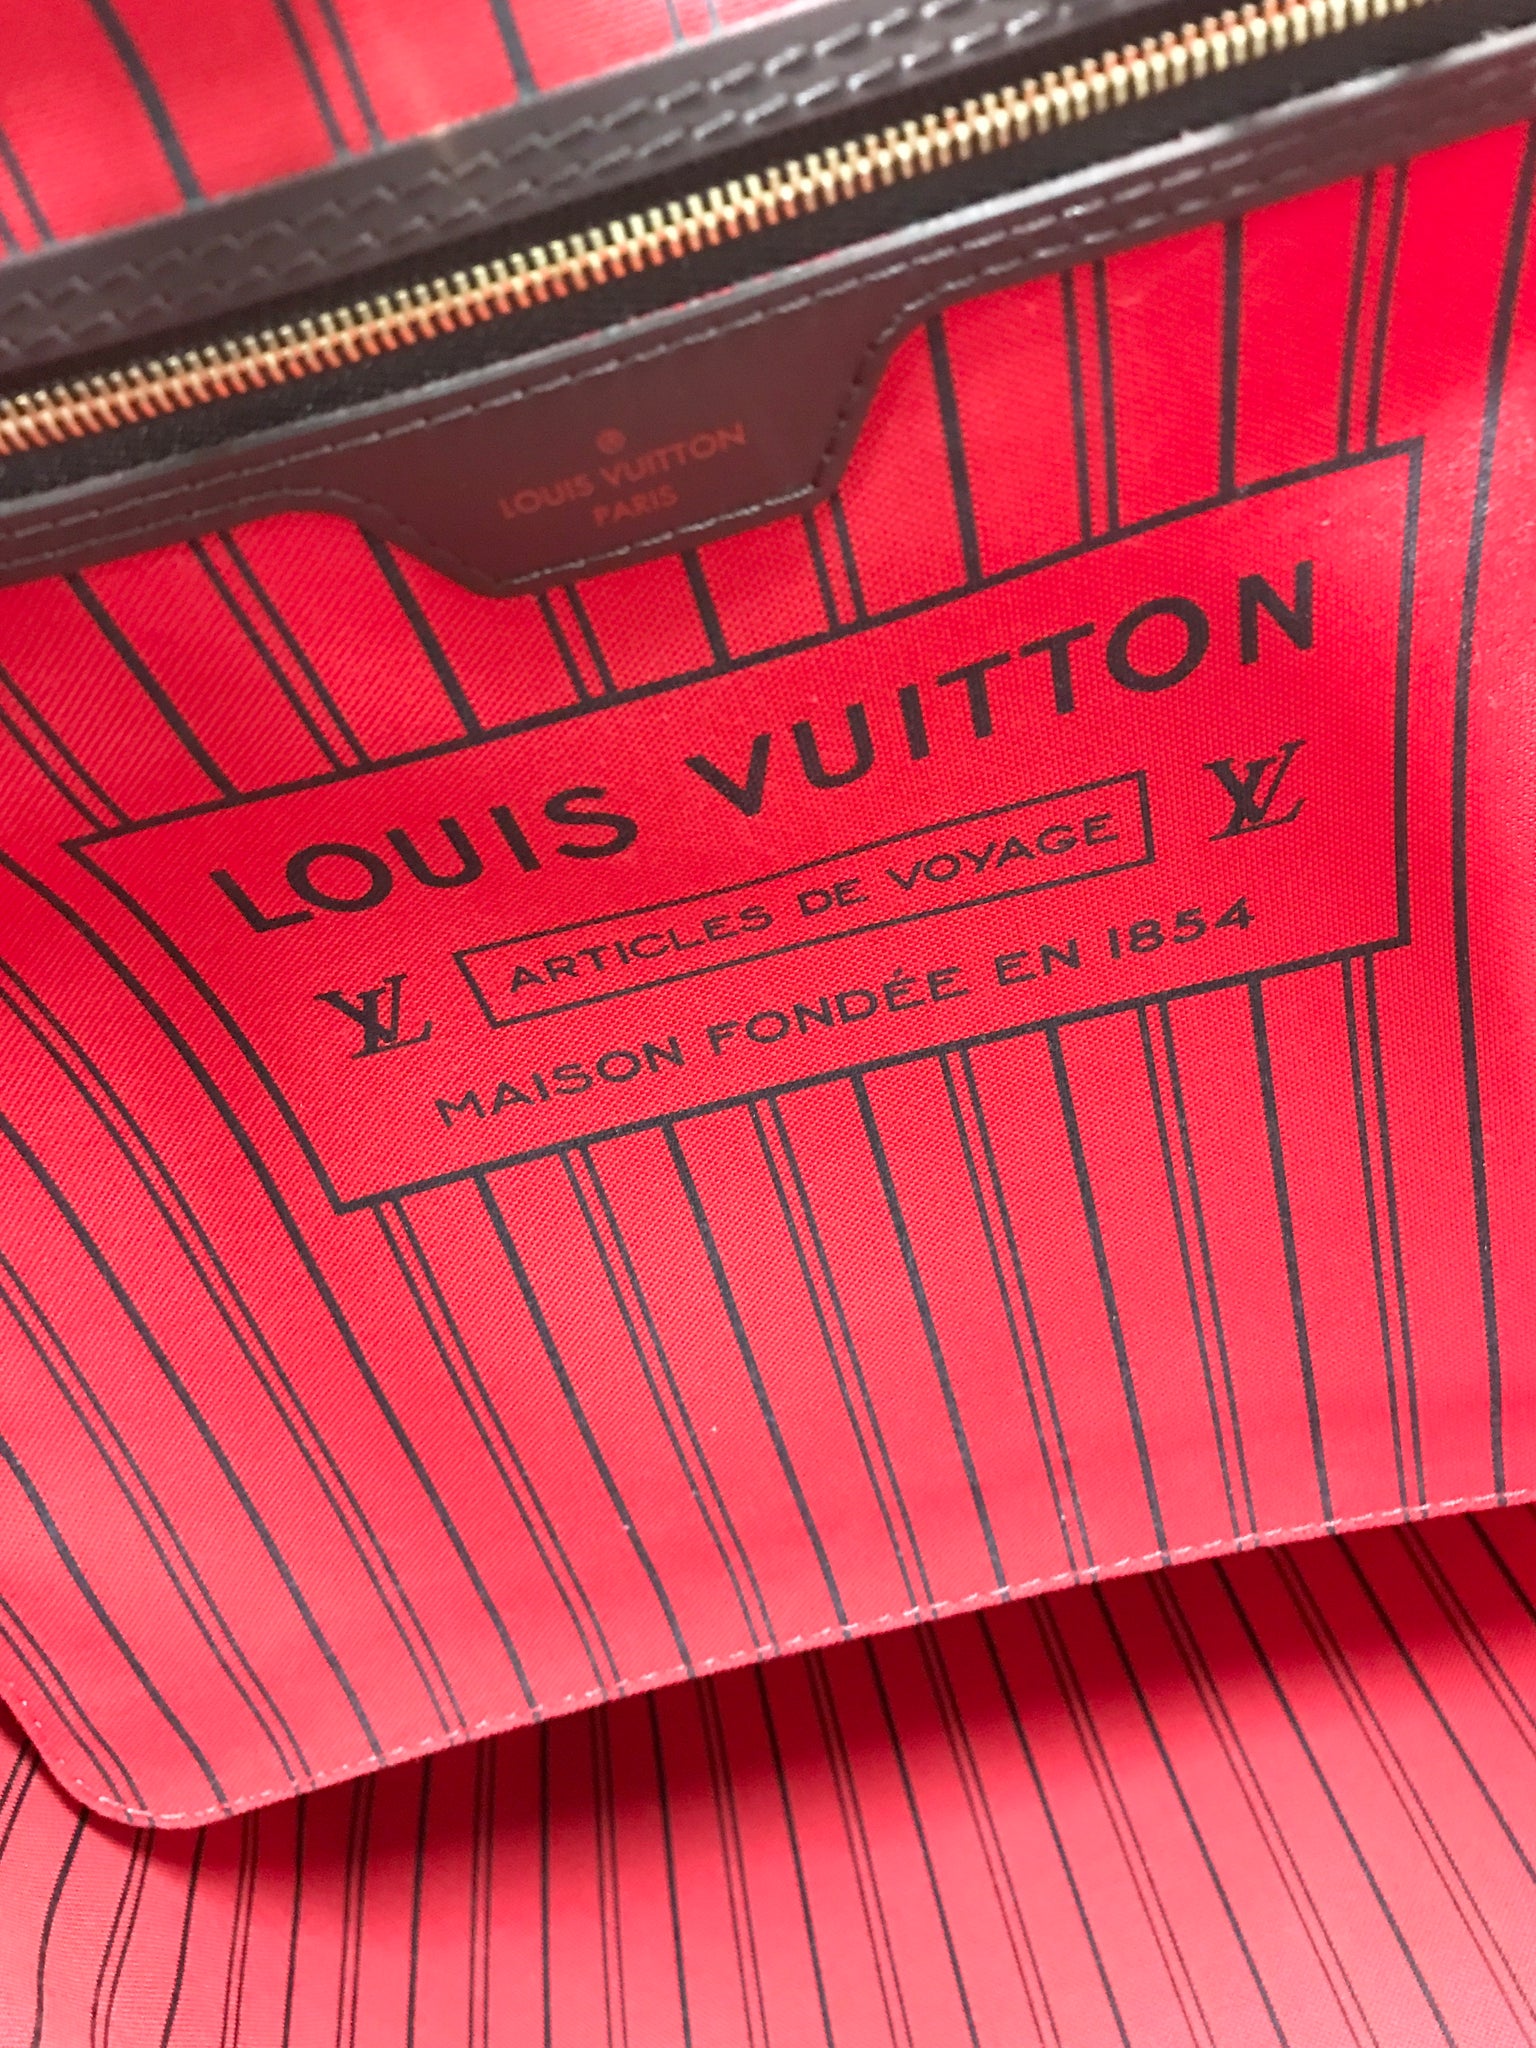 AUTHENTIC LOUIS VUITTON NEVERFULL GM Damier Ebene Tote bag No.1375